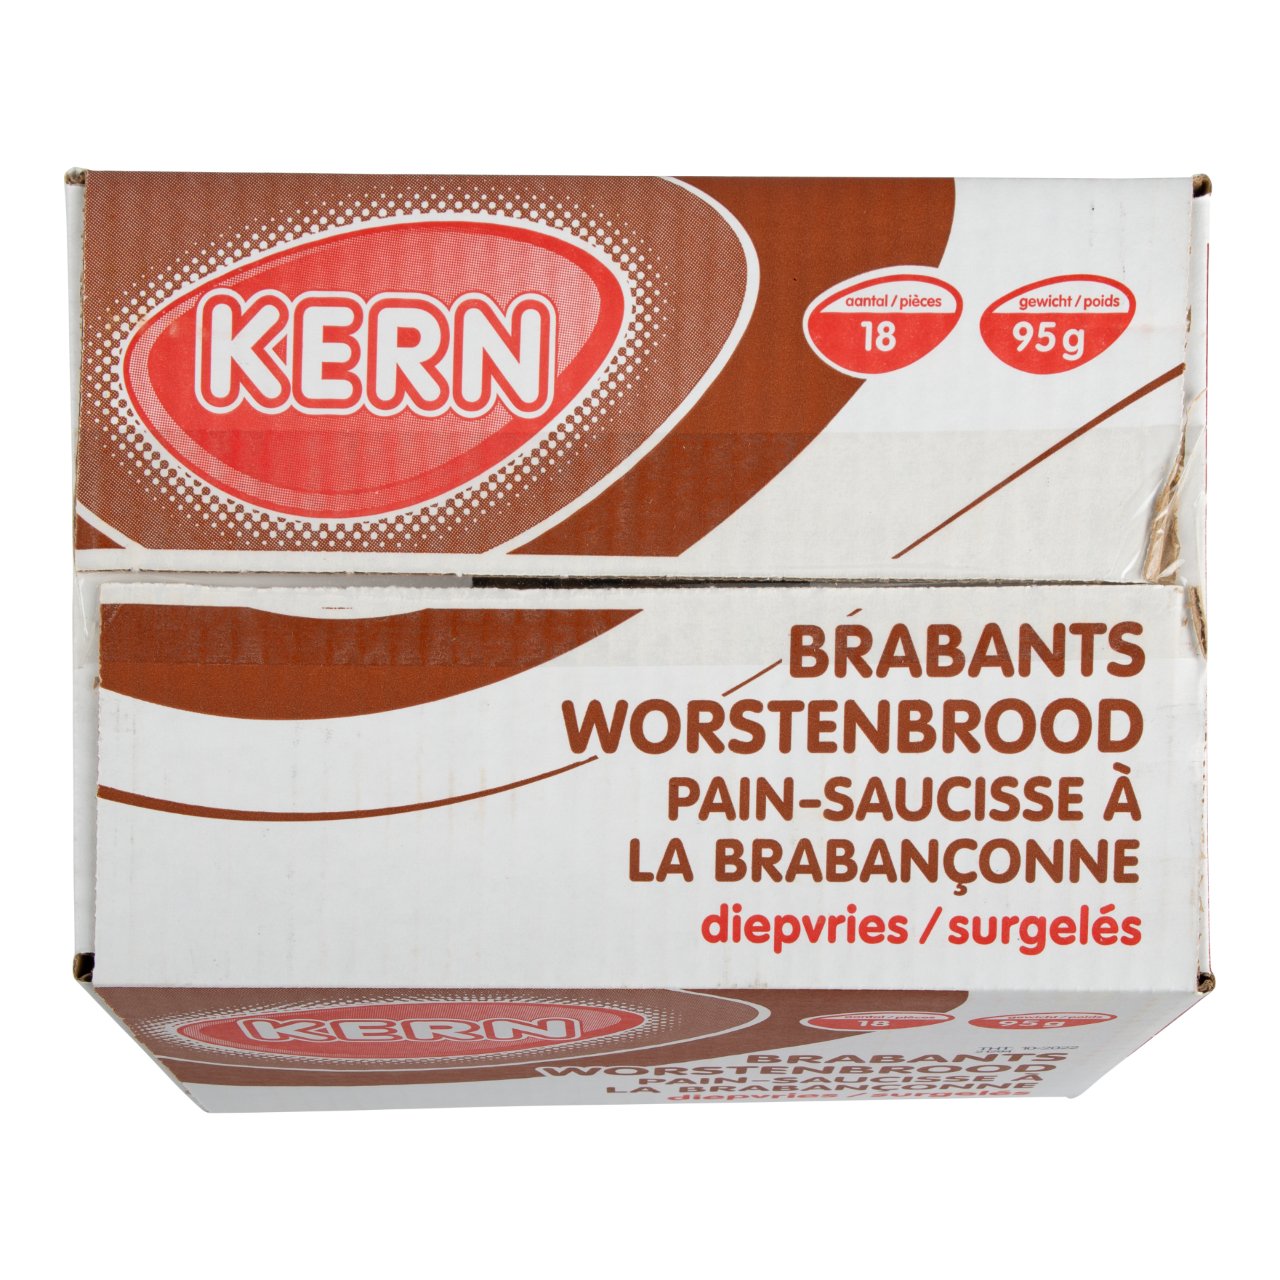 Brabants worstenbrood